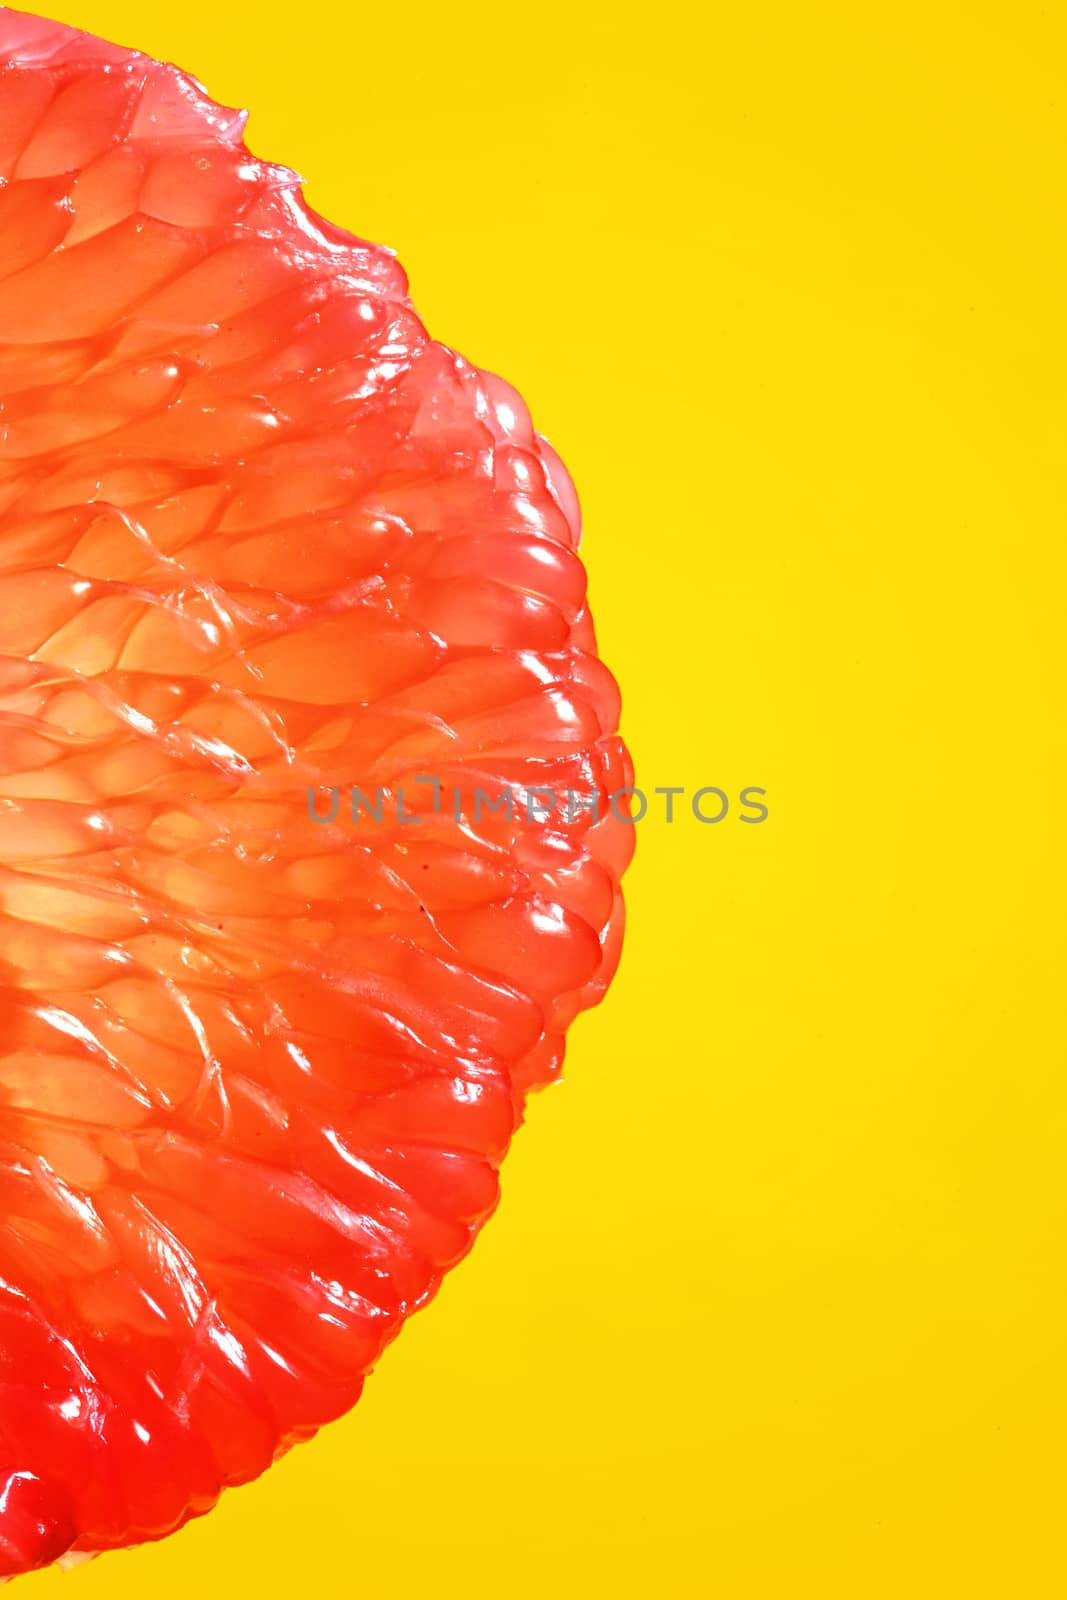 Peeled Slice Of Juicy Grapefruit on Yellow Background